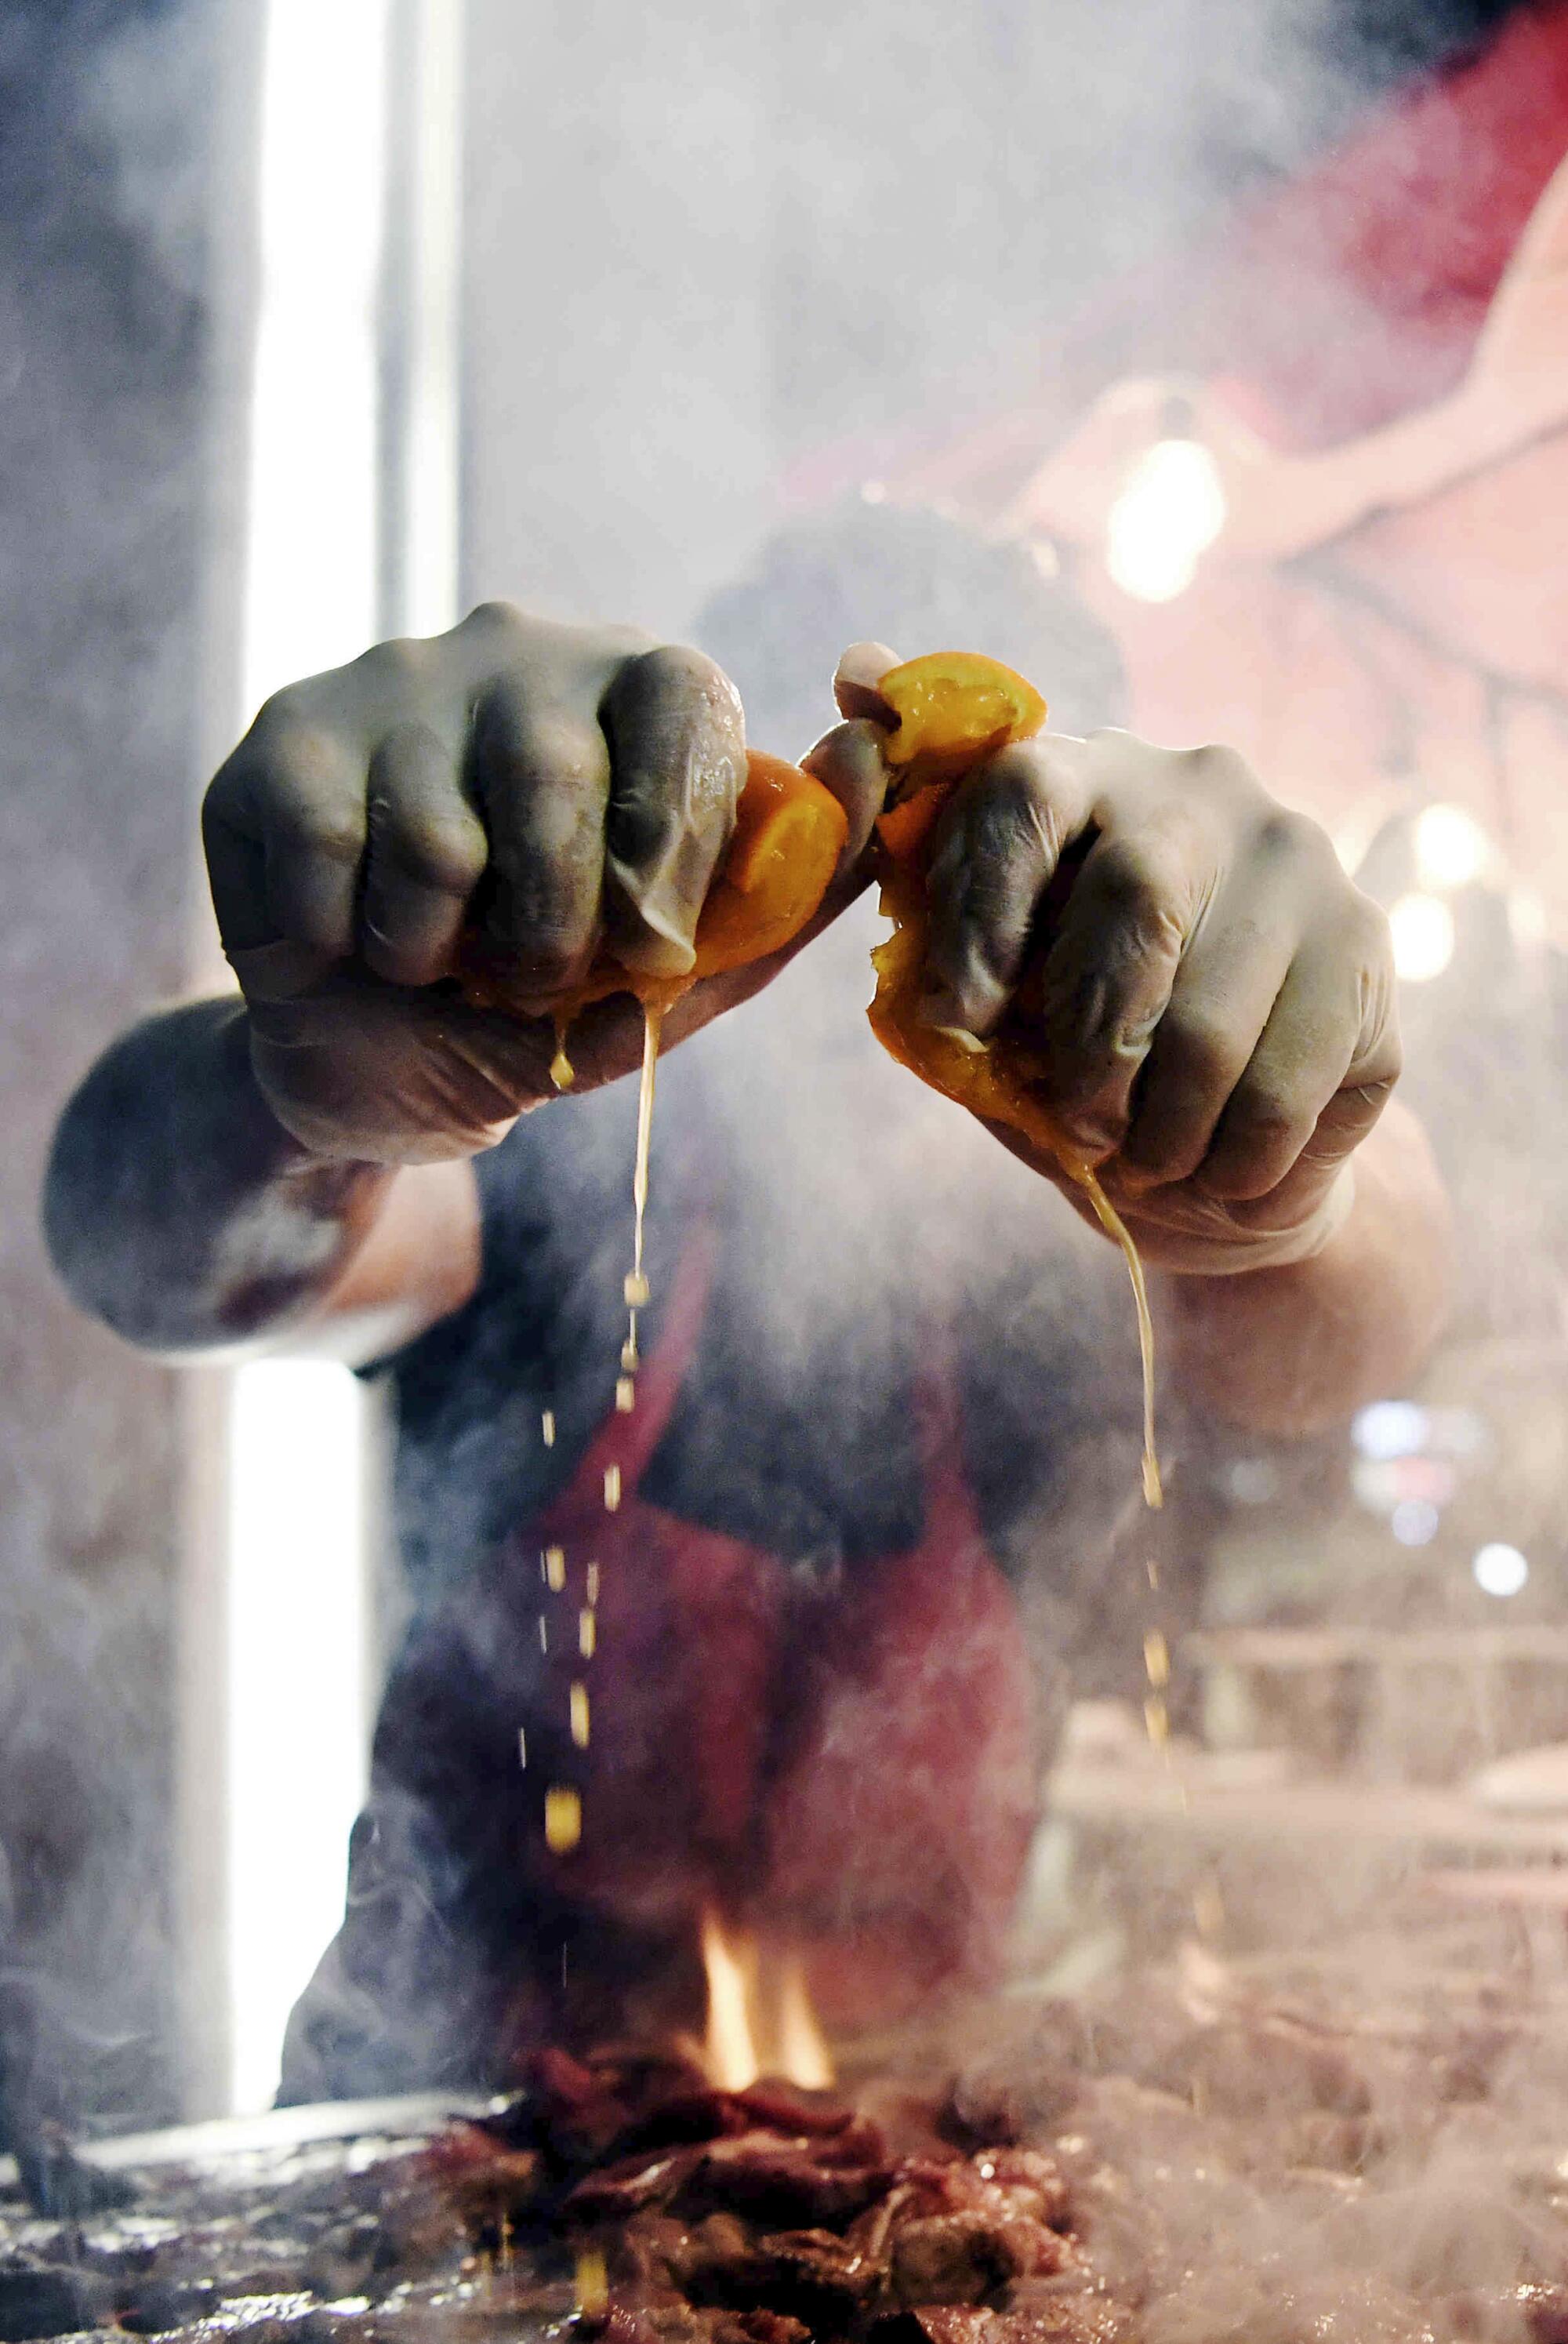  Jorge Alvarez squeezes liquid on cooking meat amid steam.